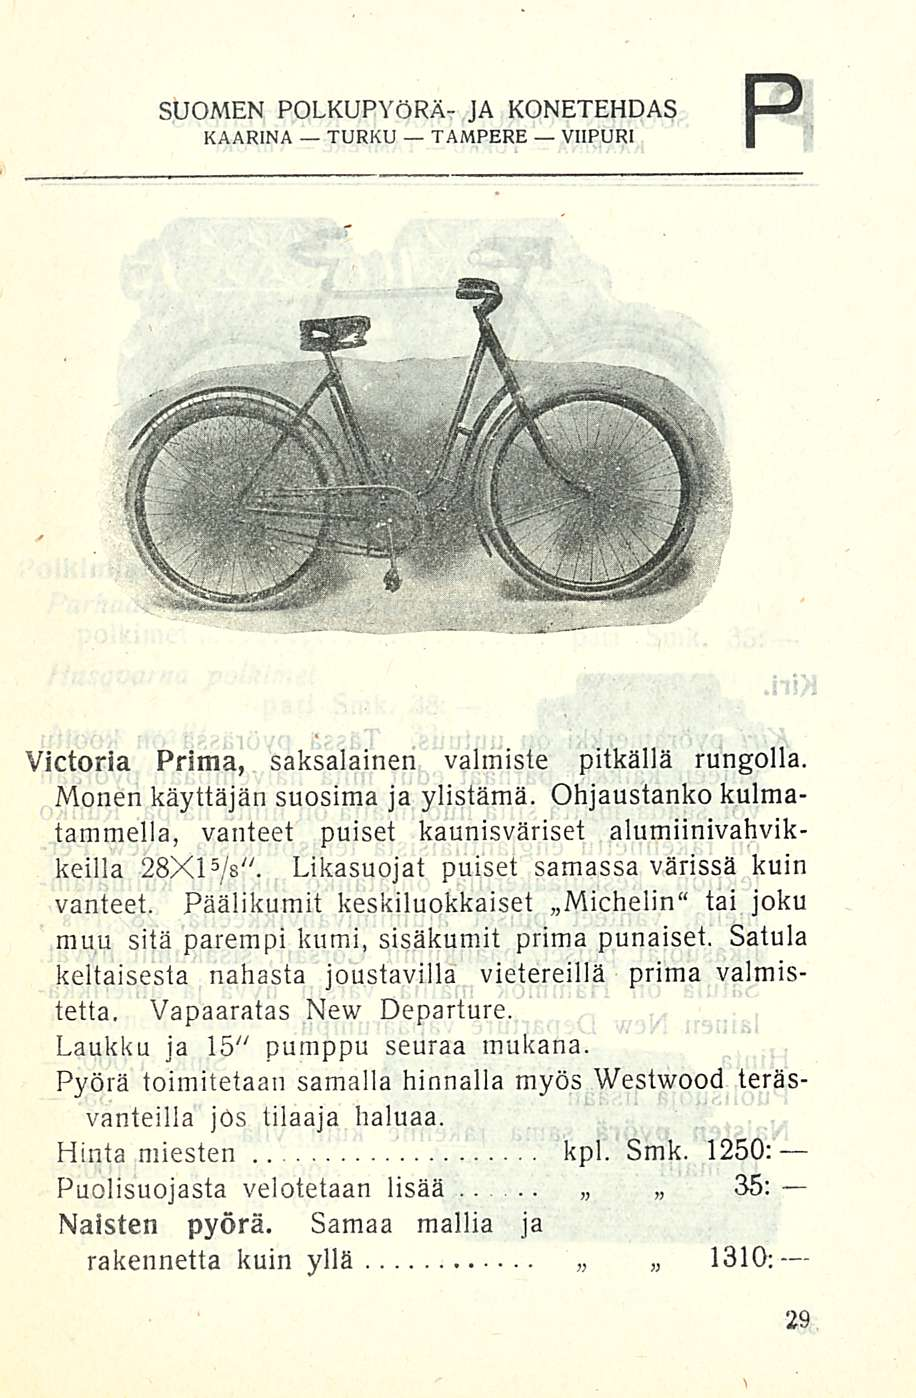 polkupyörä turku